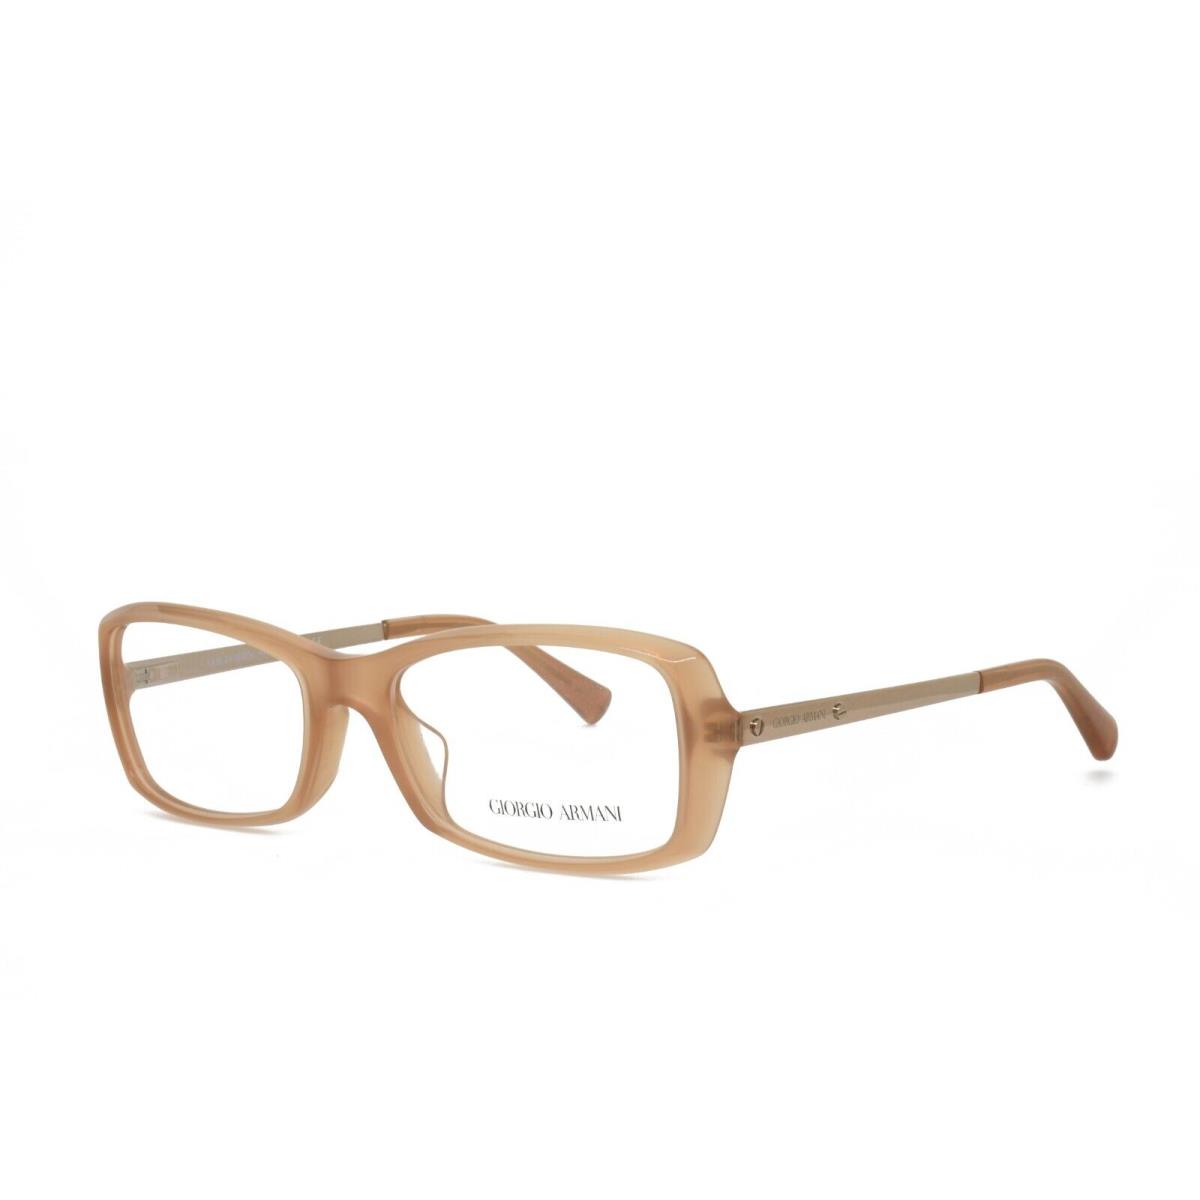 Giorgio Armani 7011F 5043 53-17-140 Light Brown Eyeglasses Frames